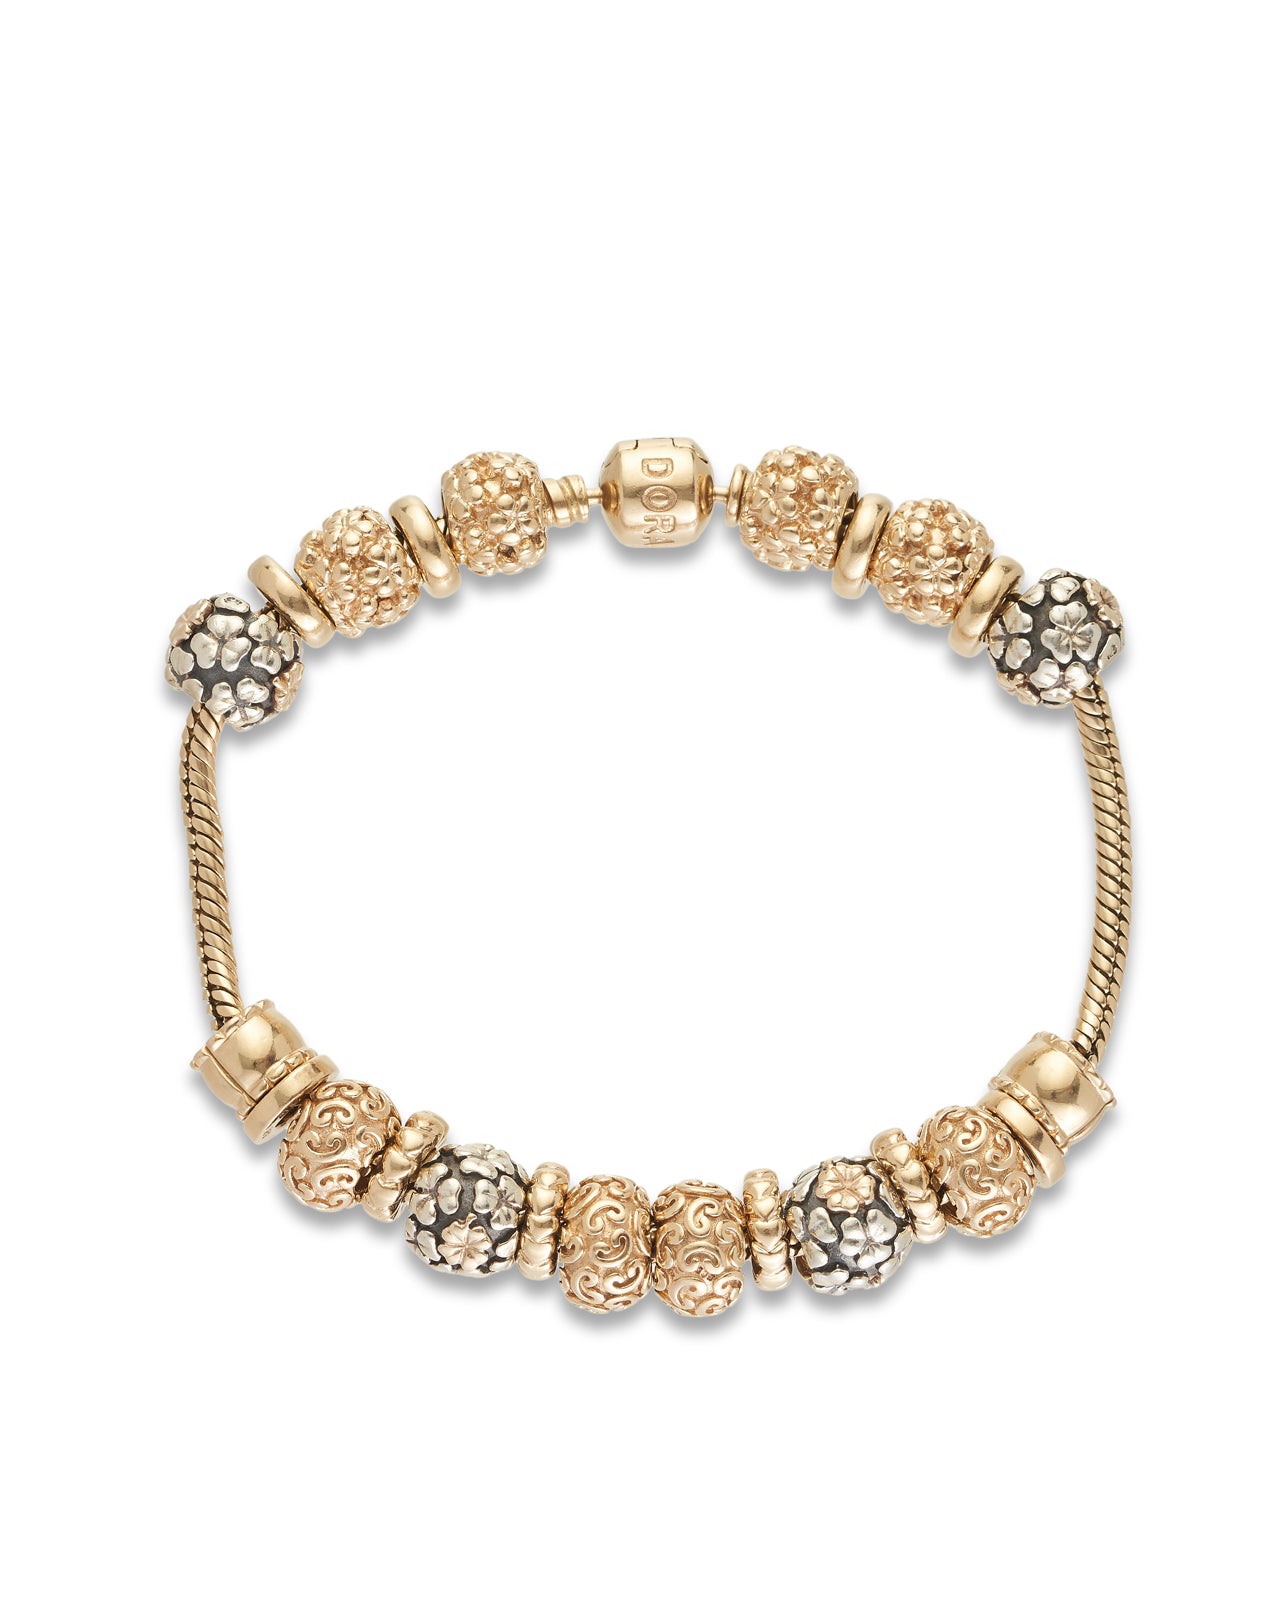 Vintage Gold & Silver Charm Bracelet, Pandora